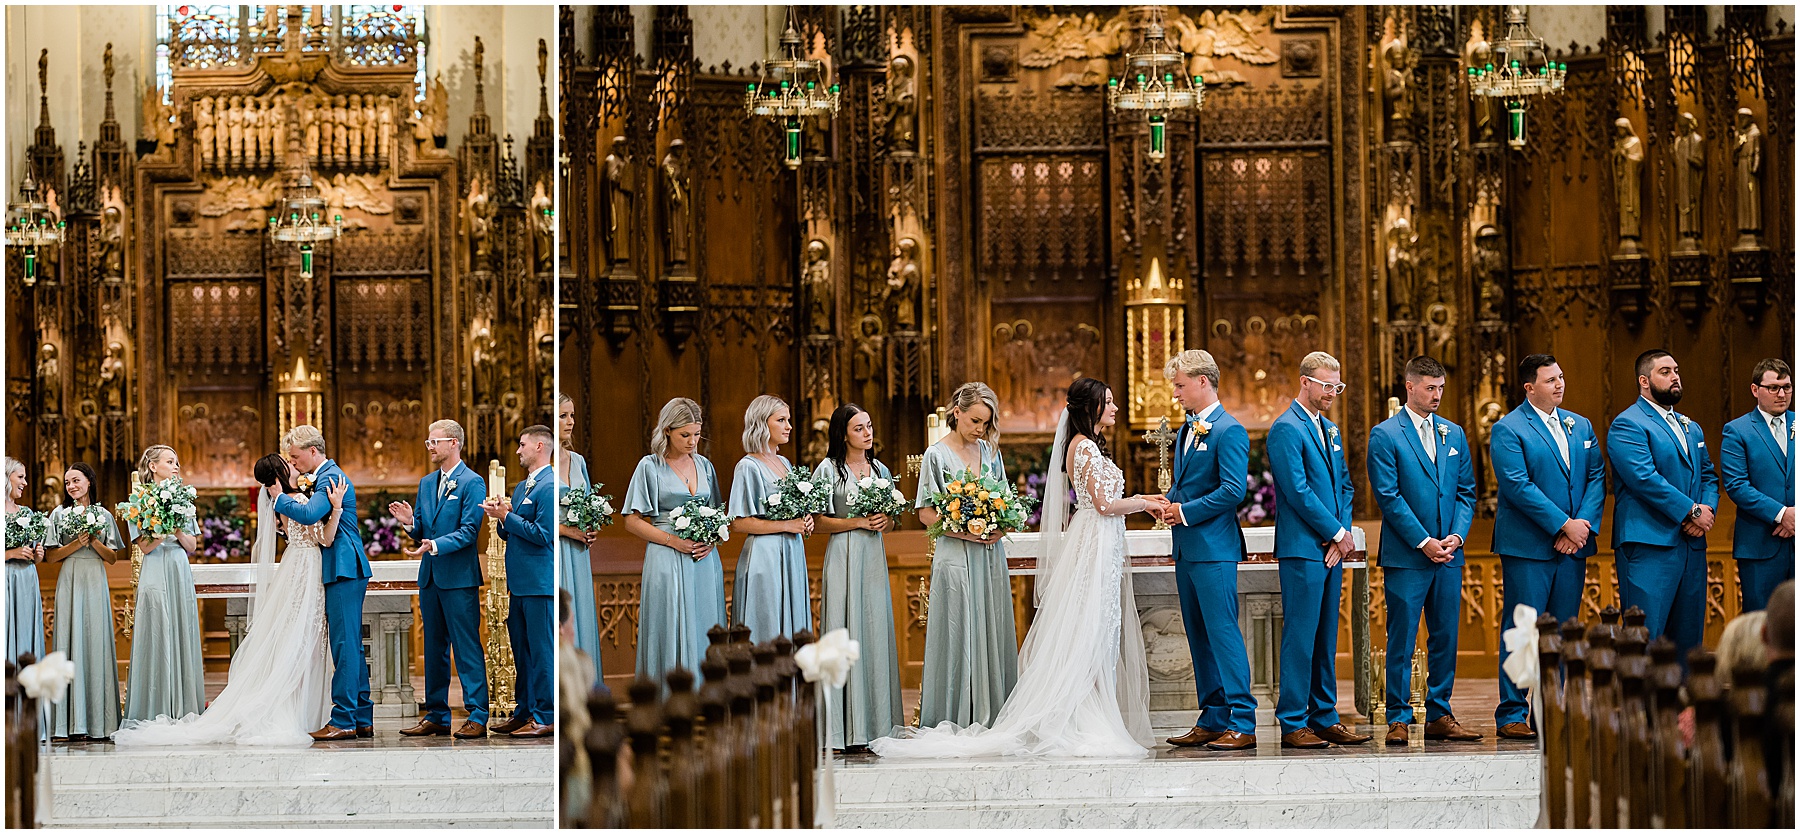 Fort Wayne wedding photographers capture bride and groom holding hands before saying, "I do"